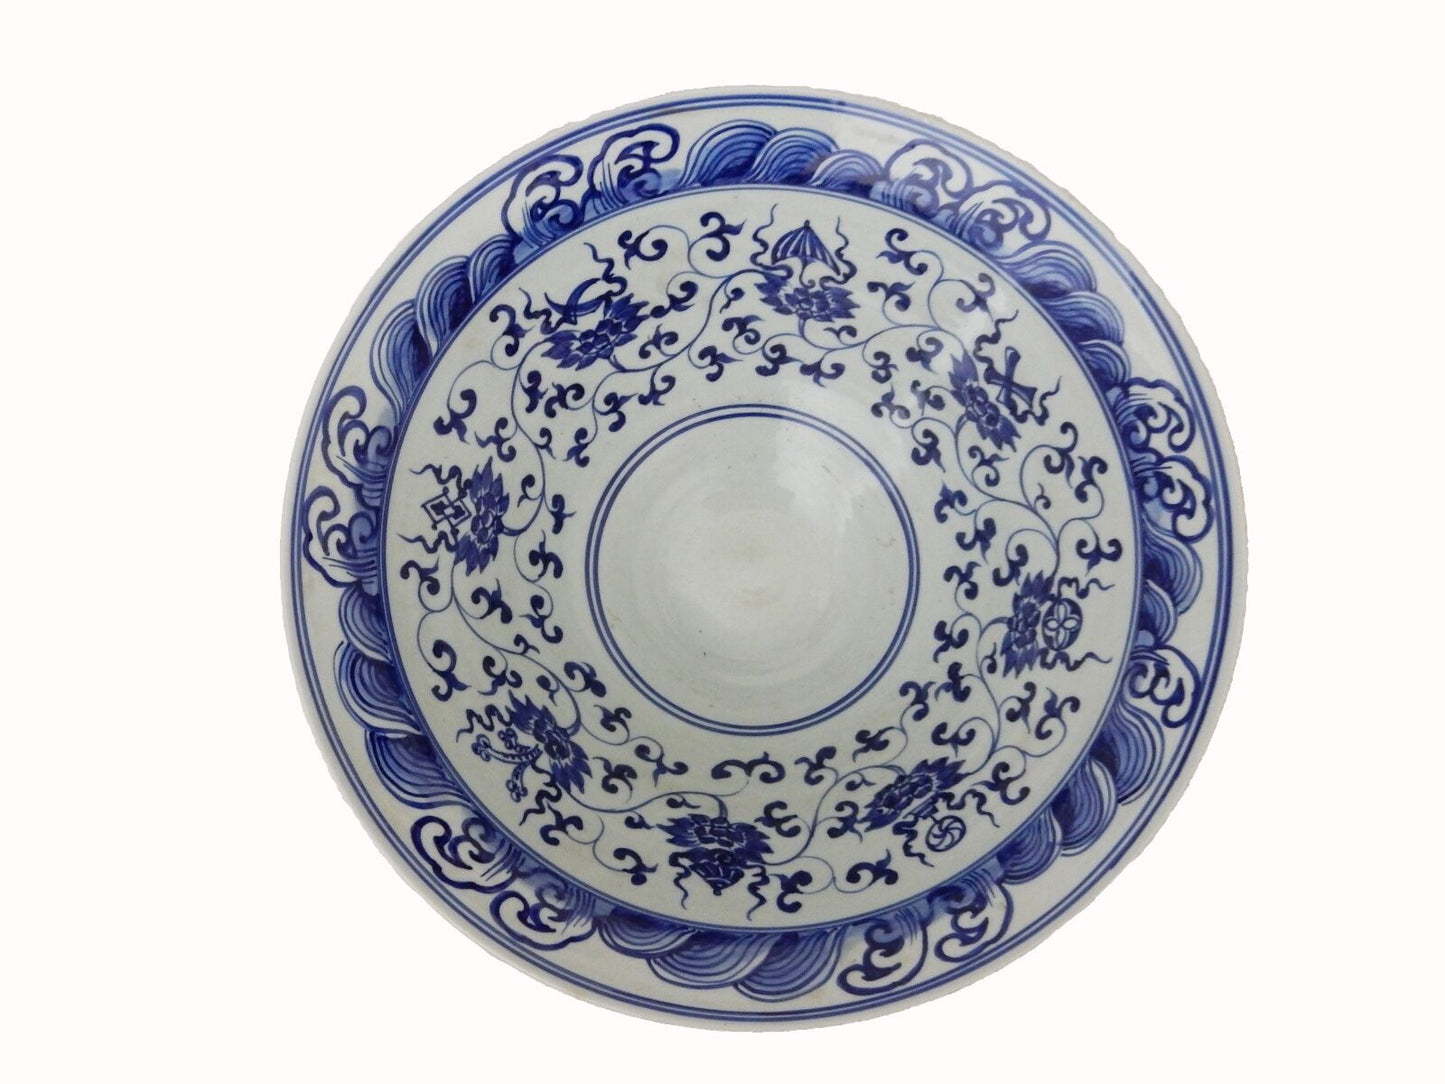 #168 Chinese B & W Porcelain LG Bowl Dragon & flowers 17.5" Diameter